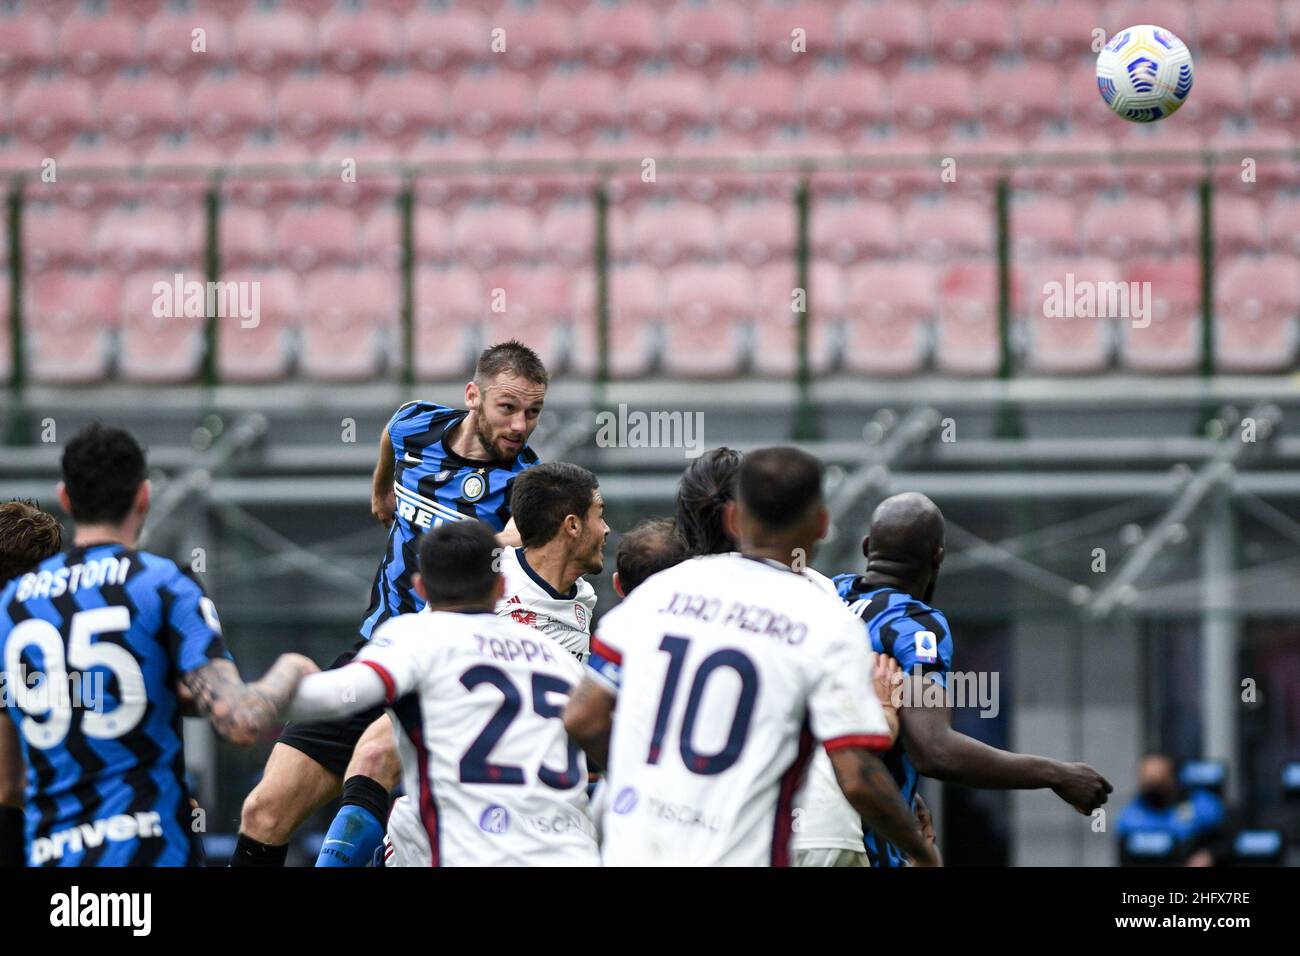 Campionato Italiano Di Calcio High Resolution Stock Photography and Images  - Alamy